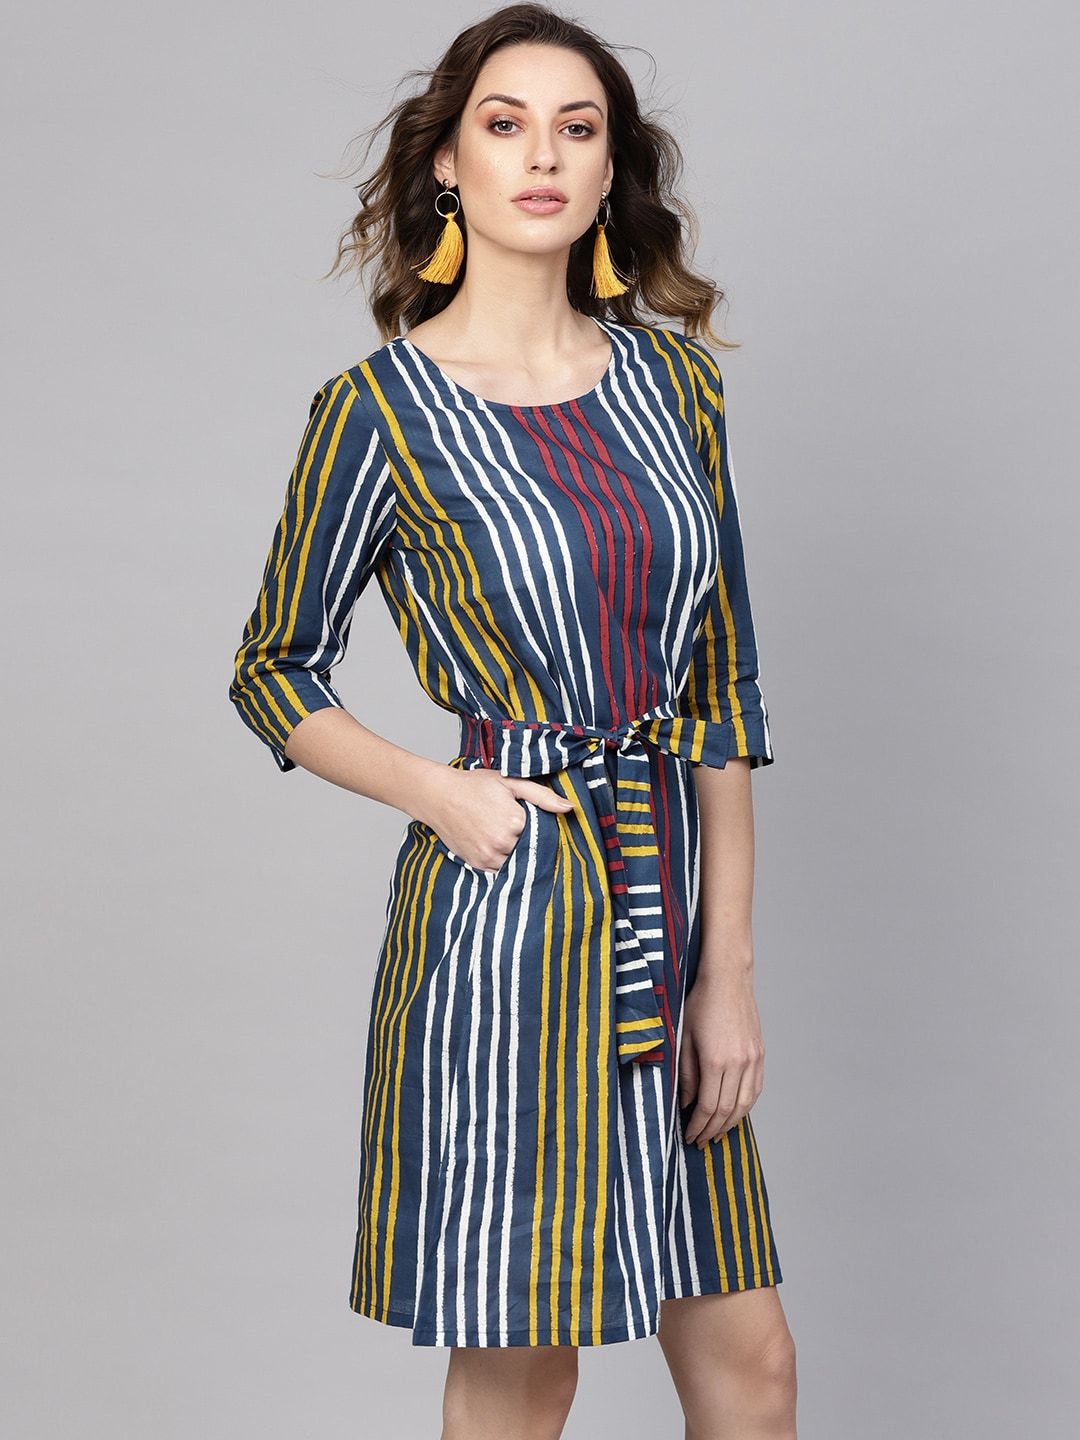 Women's  Blue & Yellow Striped A-Line Dress - AKS